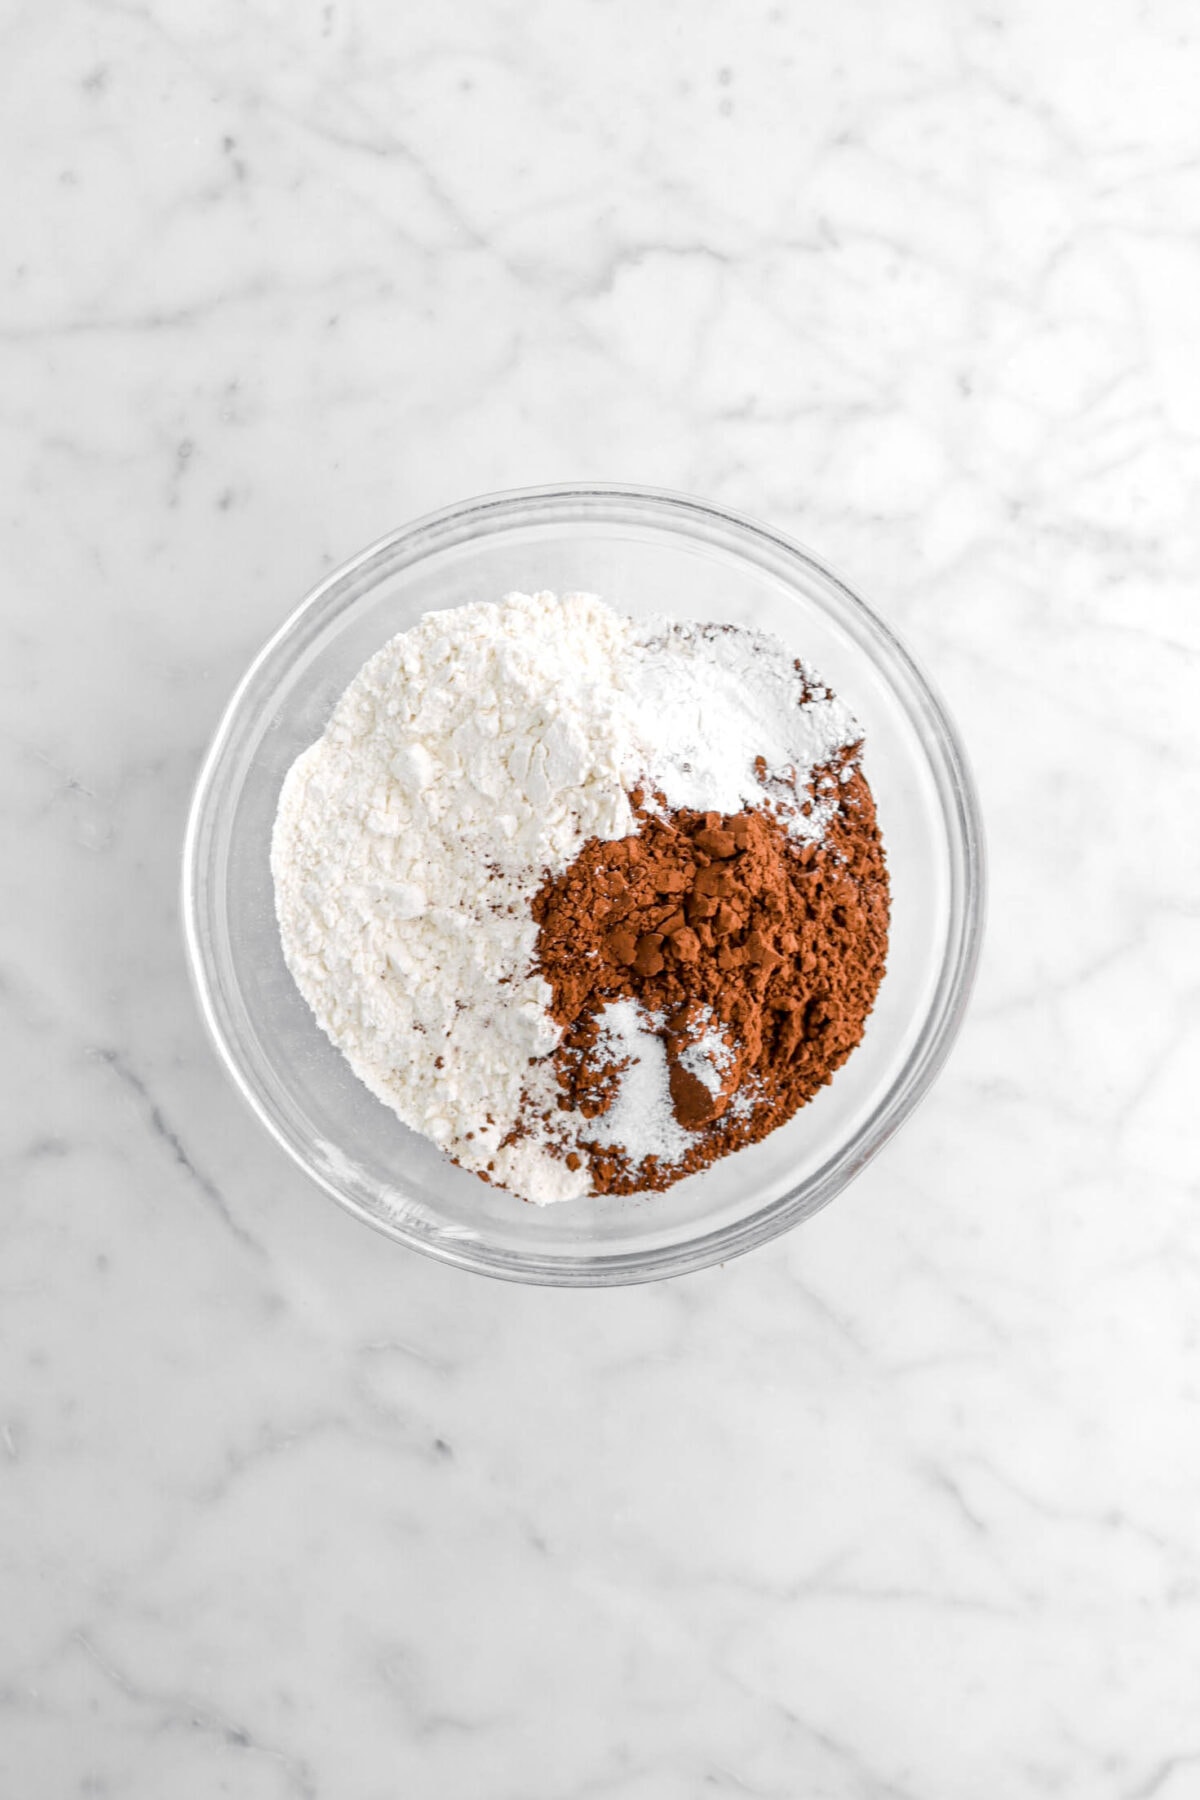 flour, cocoa powder, salt, and baking powder in glass bowl